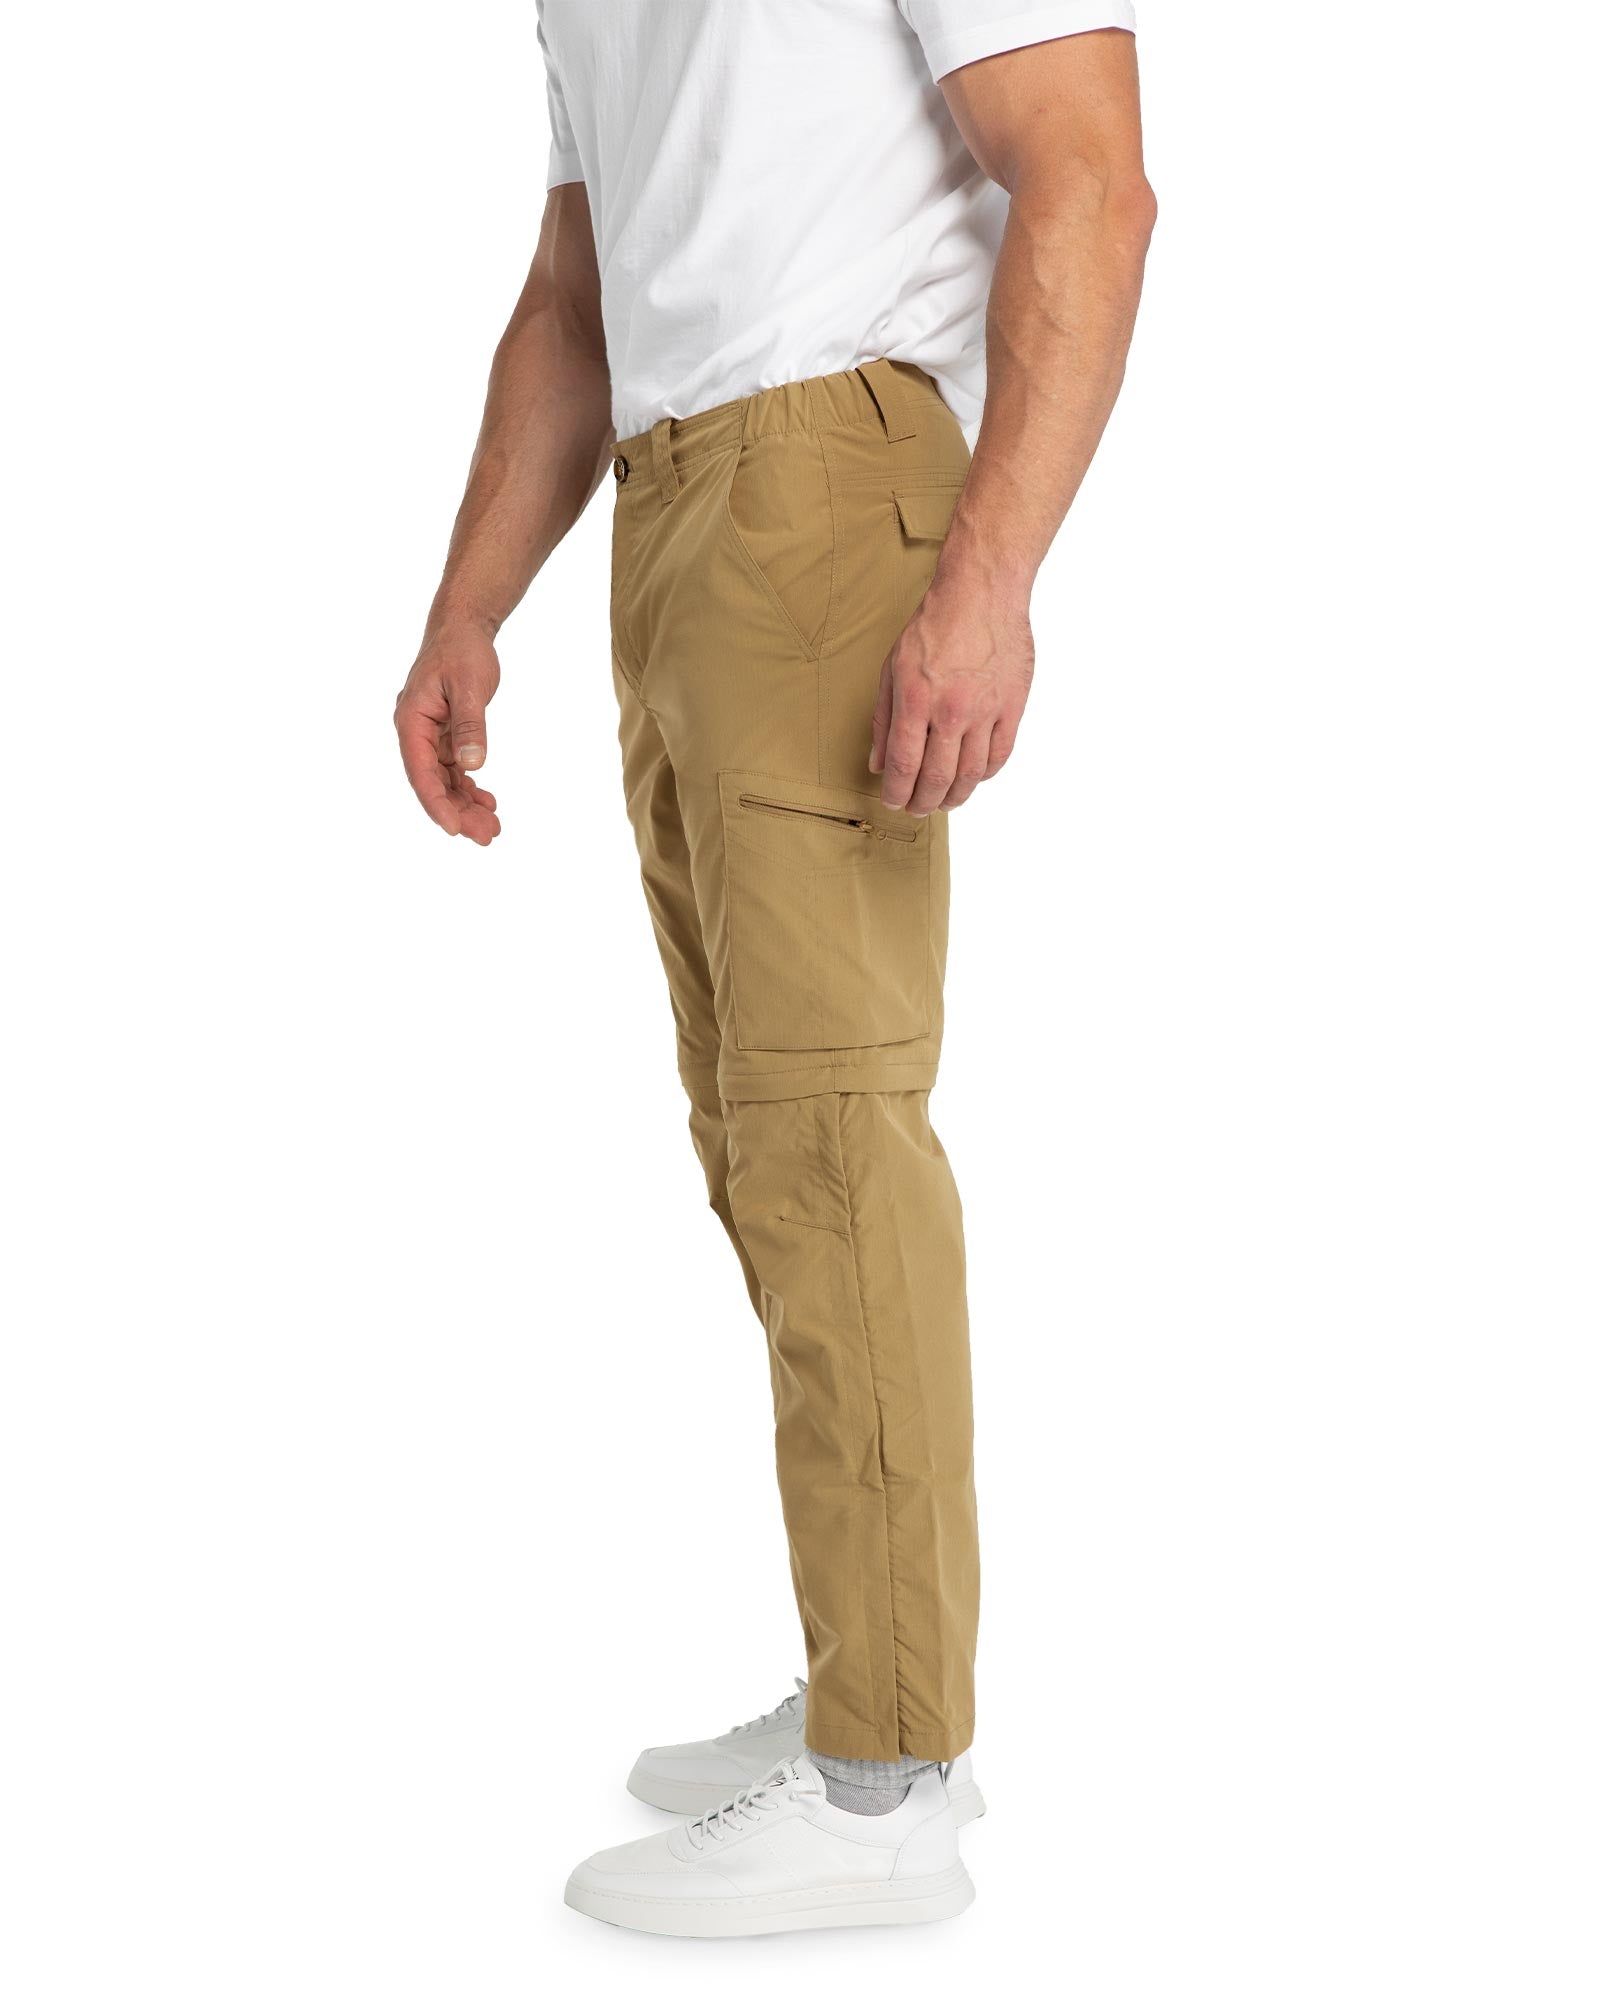 Snilers 2022 Mens Hiking Convertible Pants Outdoor Waterproof Quick Dry Zip Off Lightweight Fishing Pants, Men's, Size: Large, Beige